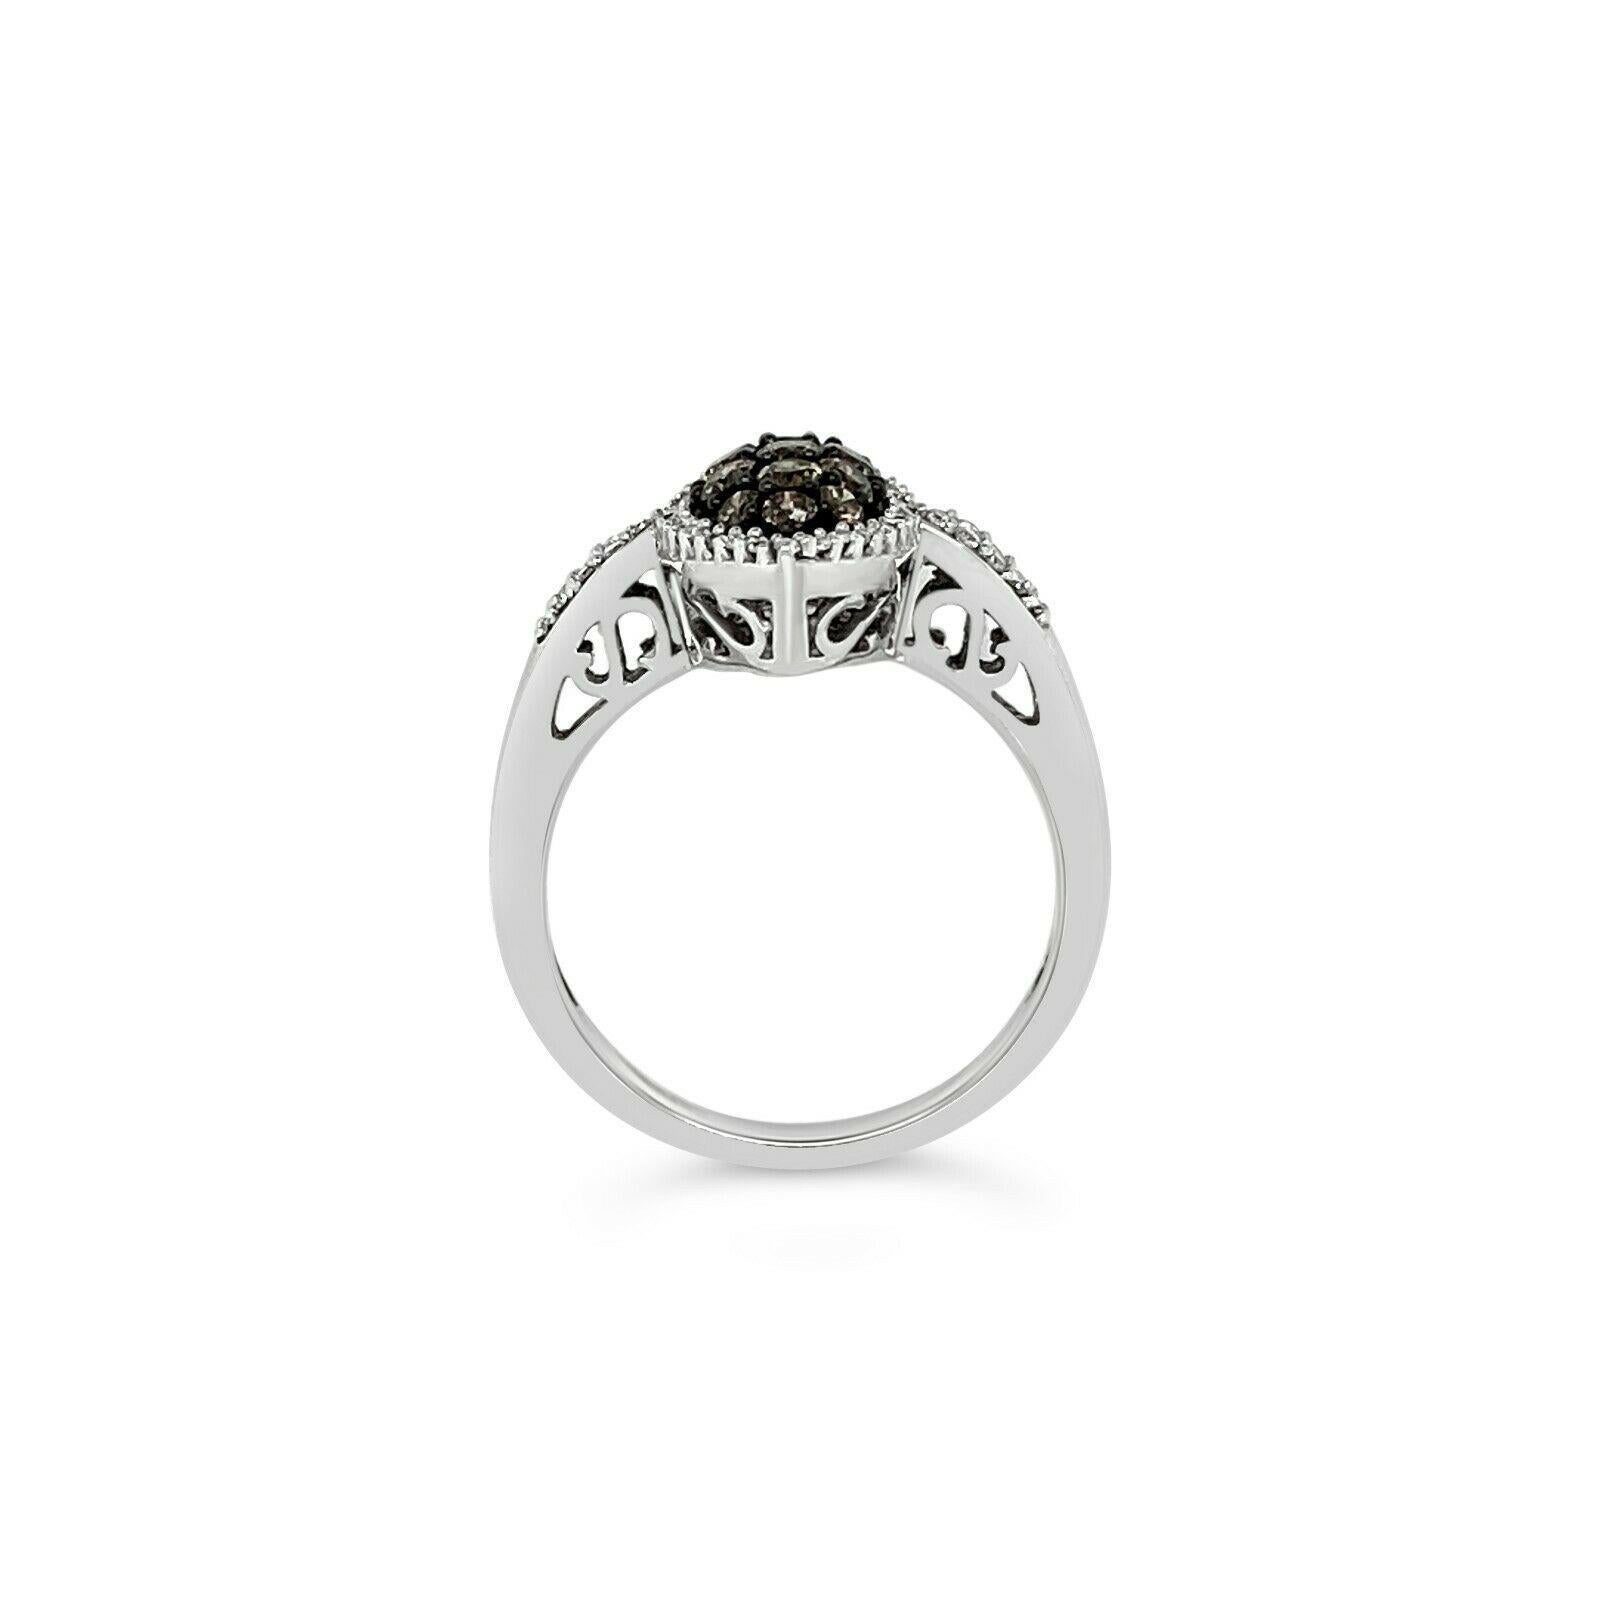 LeVian Ring featuring Chocolate Diamonds Vanilla Diamonds set in 14K White Gold